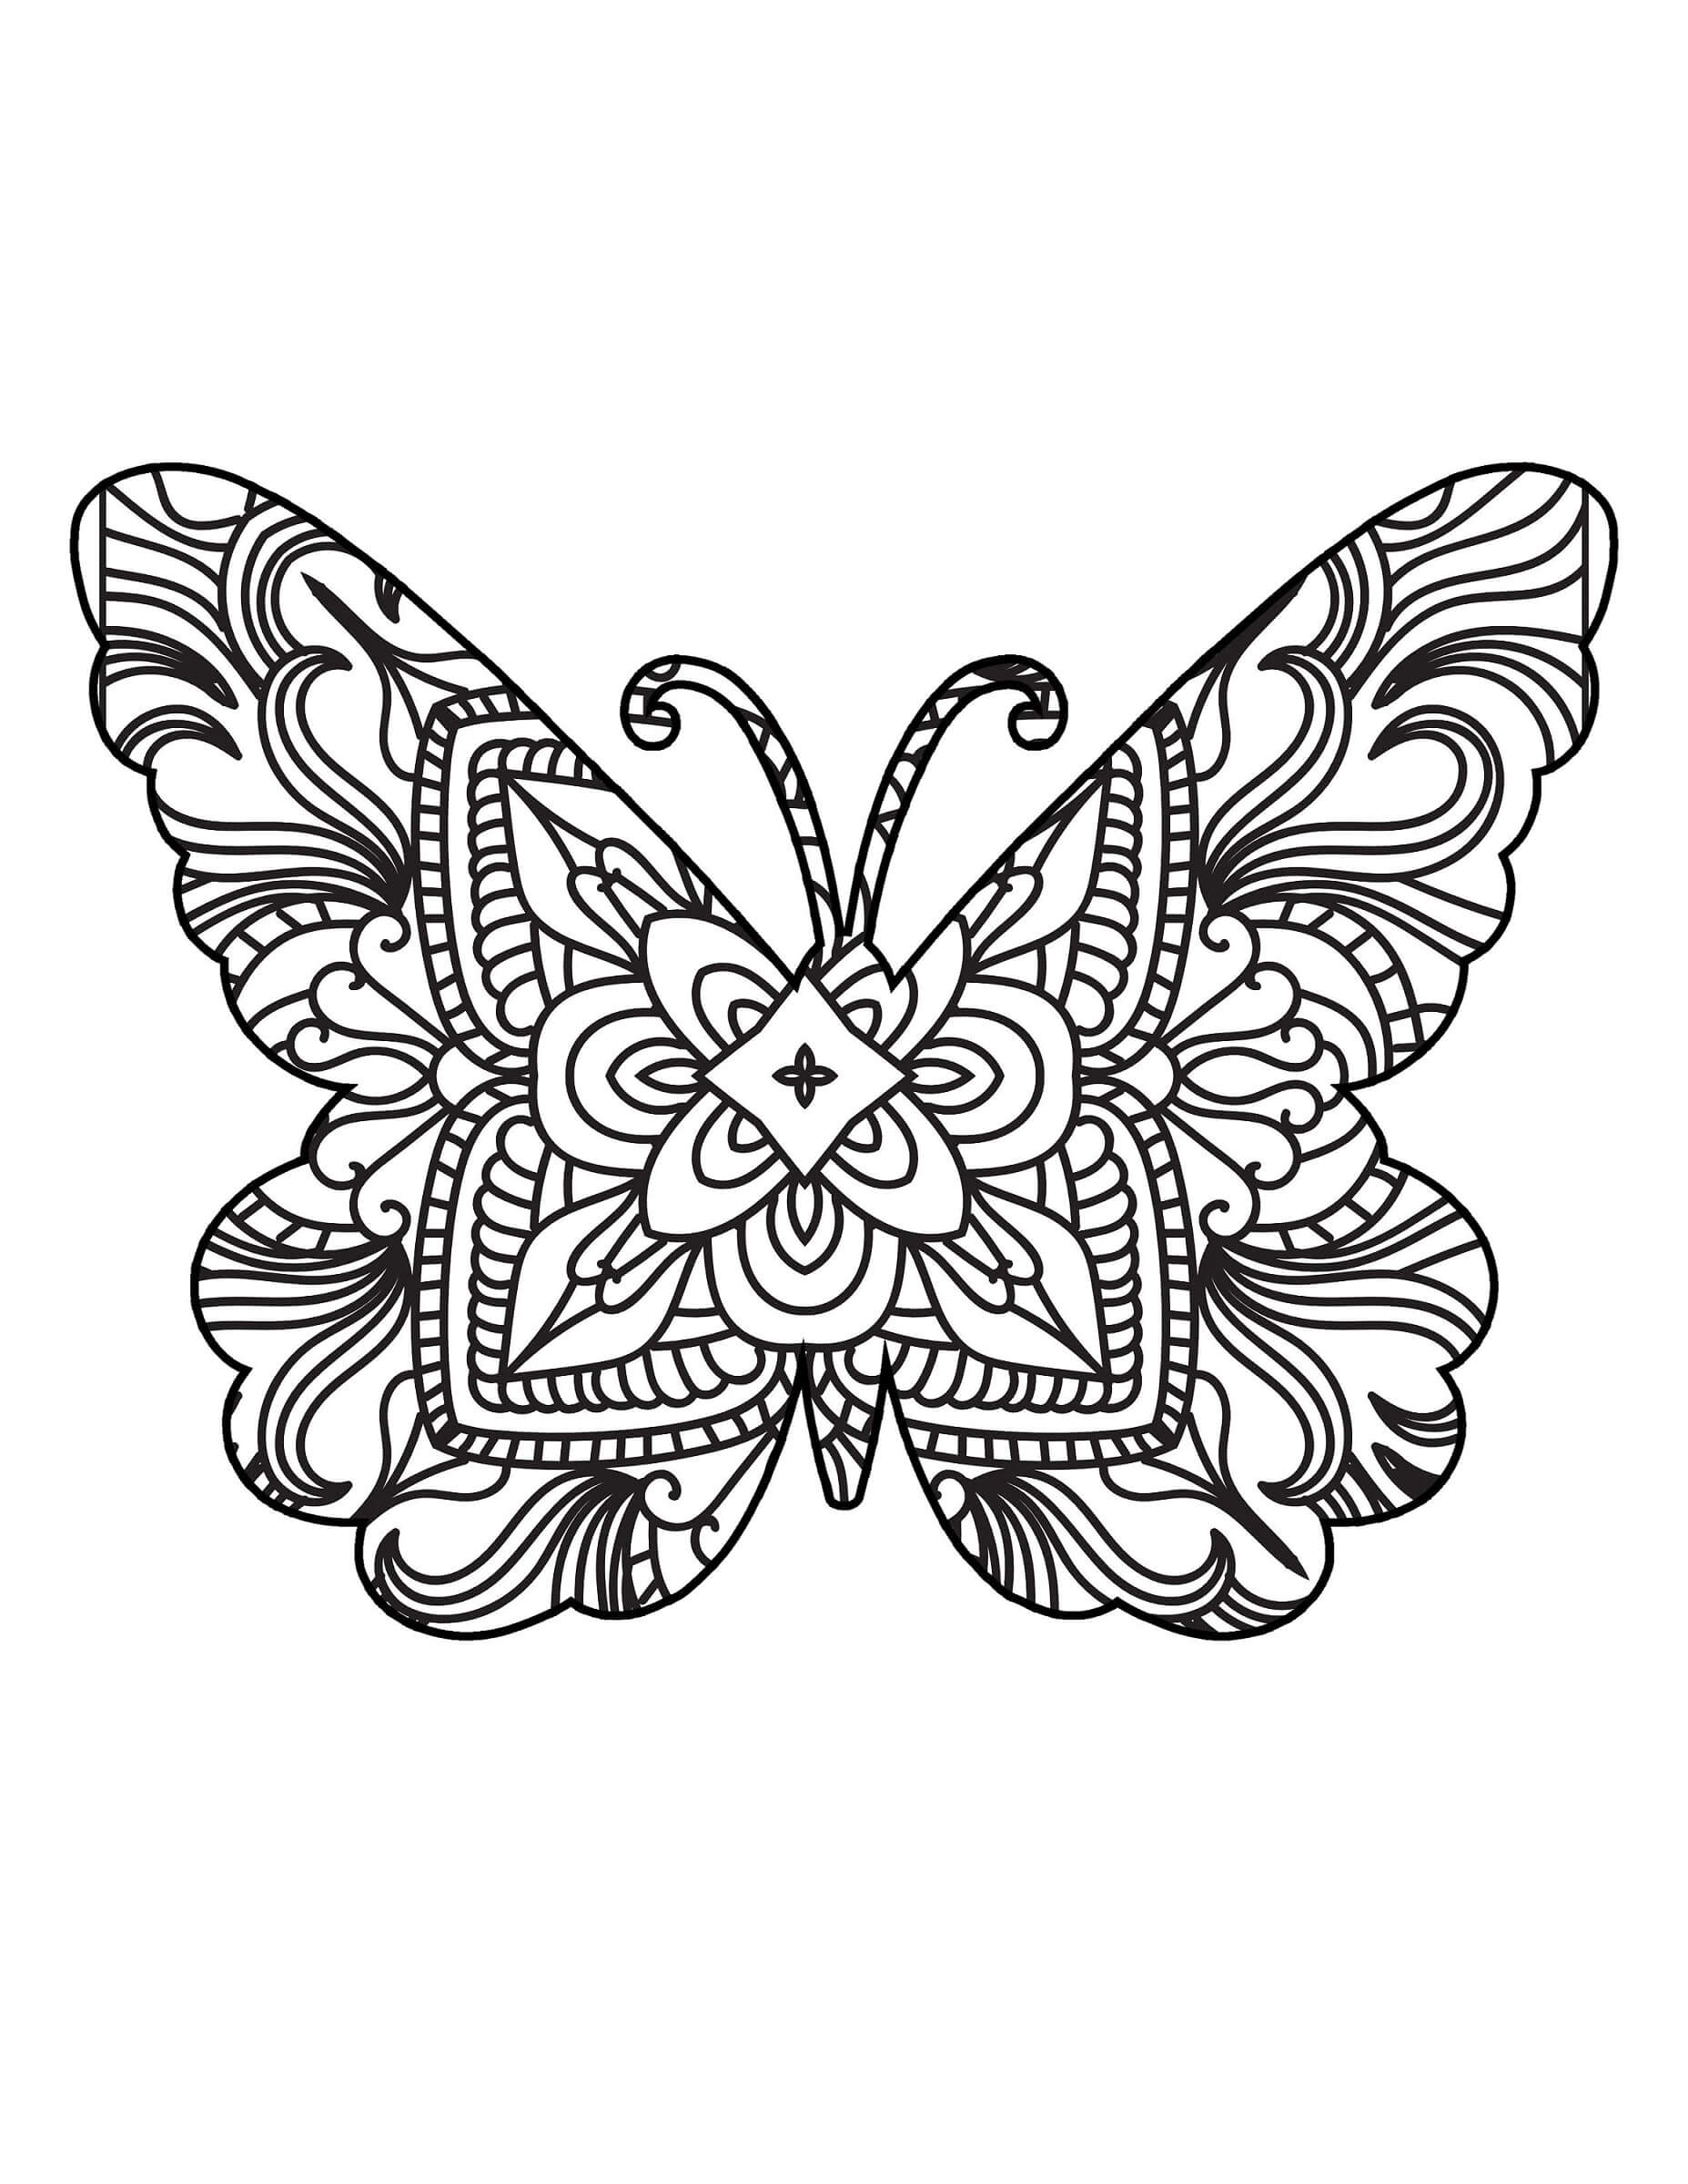 Dibujos de Impresionante Mandala de Mariposas para colorear